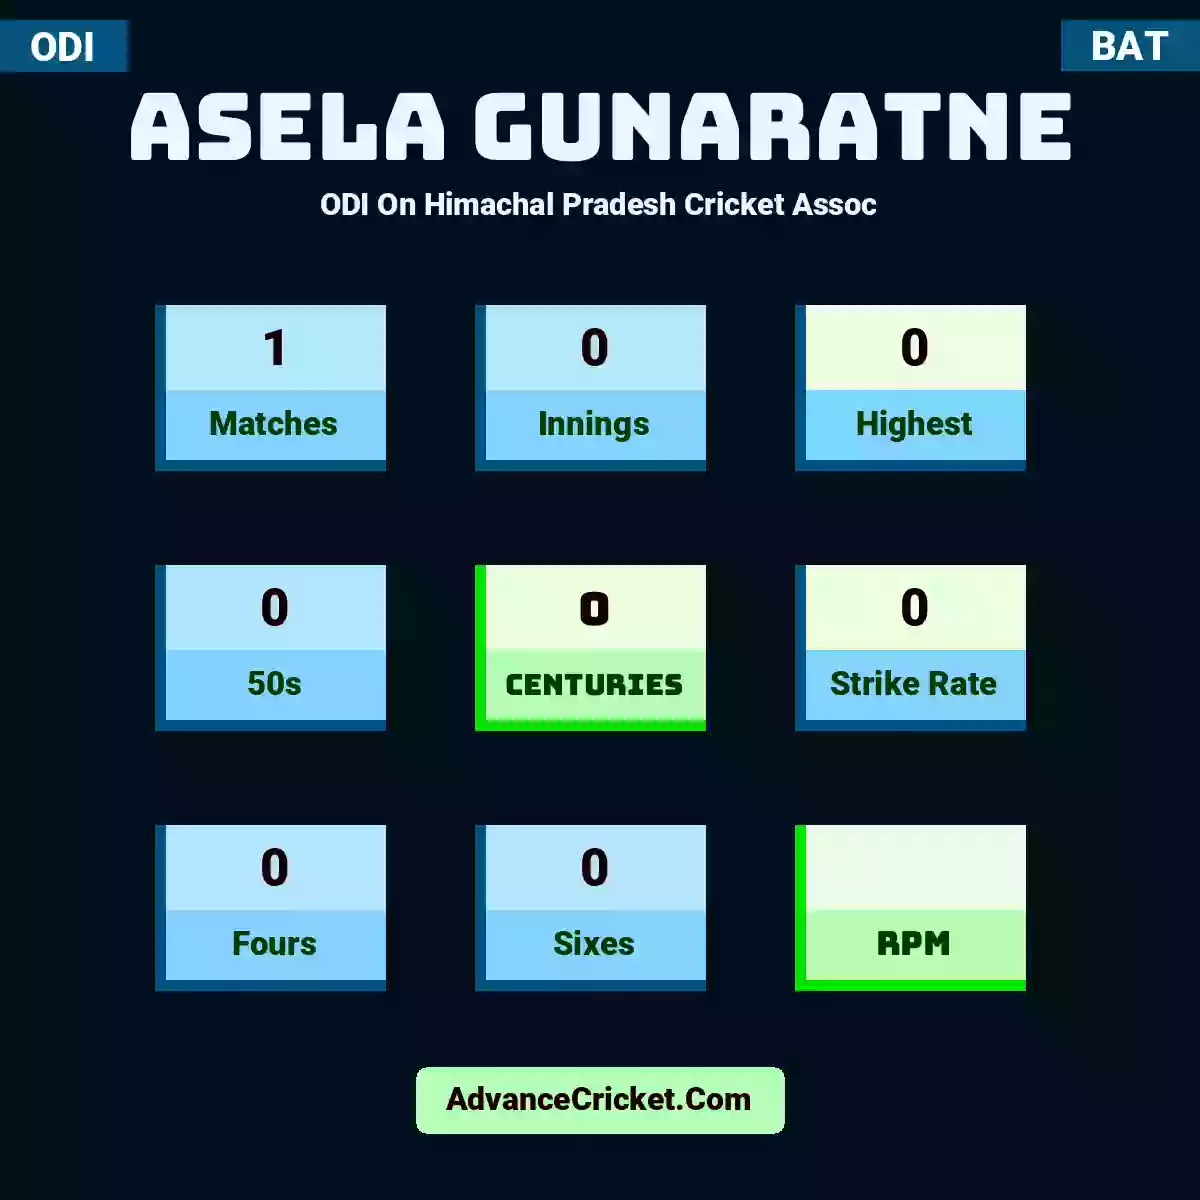 Asela Gunaratne ODI  On Himachal Pradesh Cricket Assoc, Asela Gunaratne played 1 matches, scored 0 runs as highest, 0 half-centuries, and 0 centuries, with a strike rate of 0. A.Gunaratne hit 0 fours and 0 sixes.